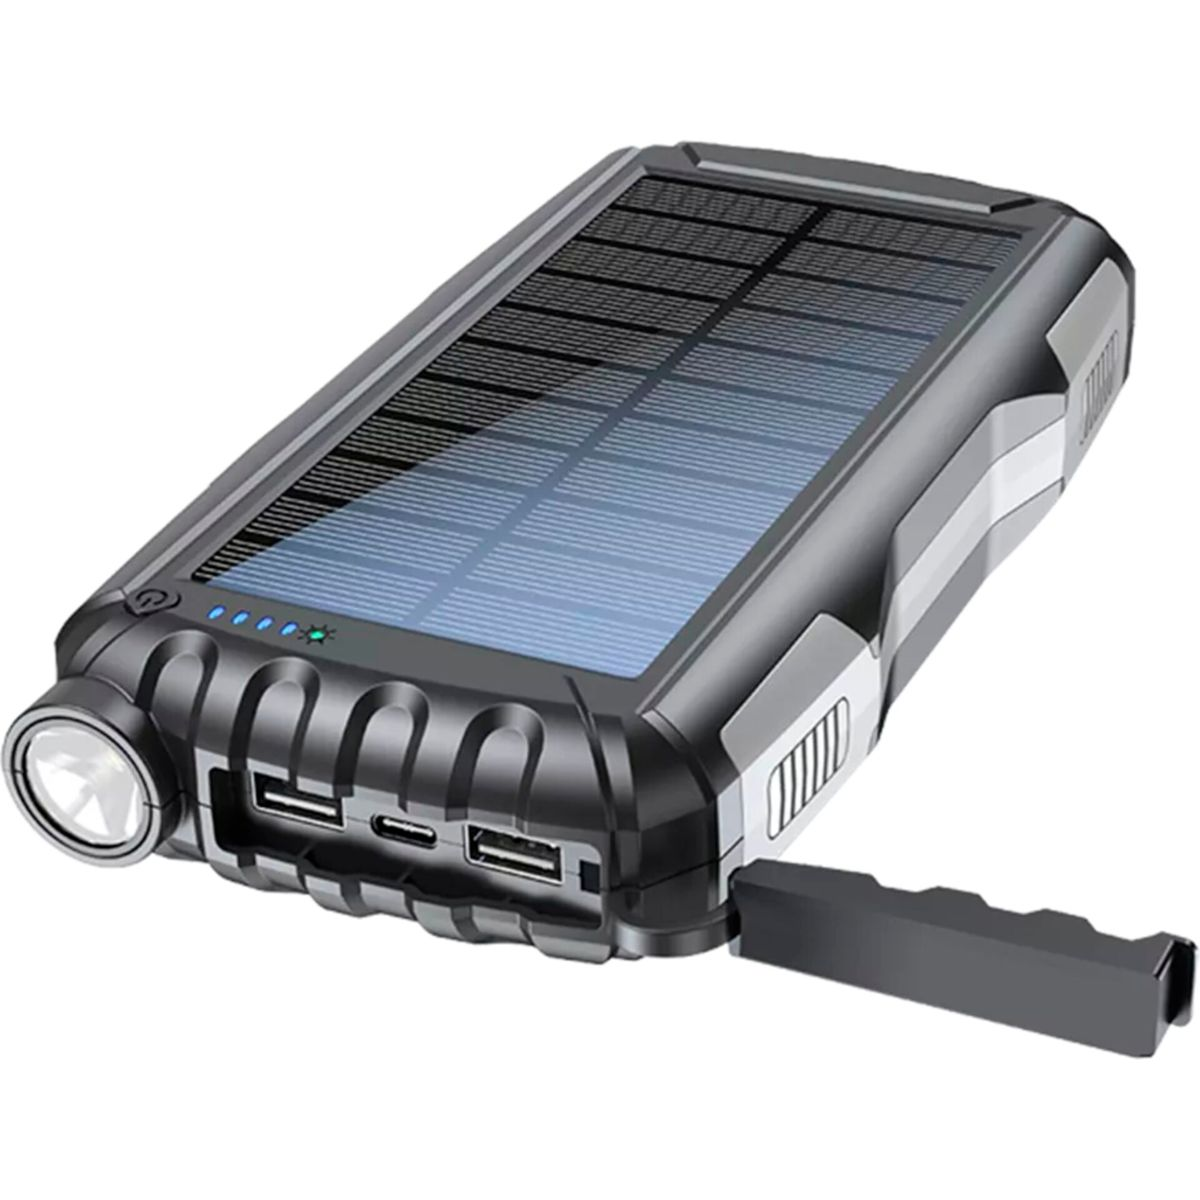 DENVER Powerbank Solar PSO-20009 Powerbank 20000mAh 20000 schwarz Flashlight 